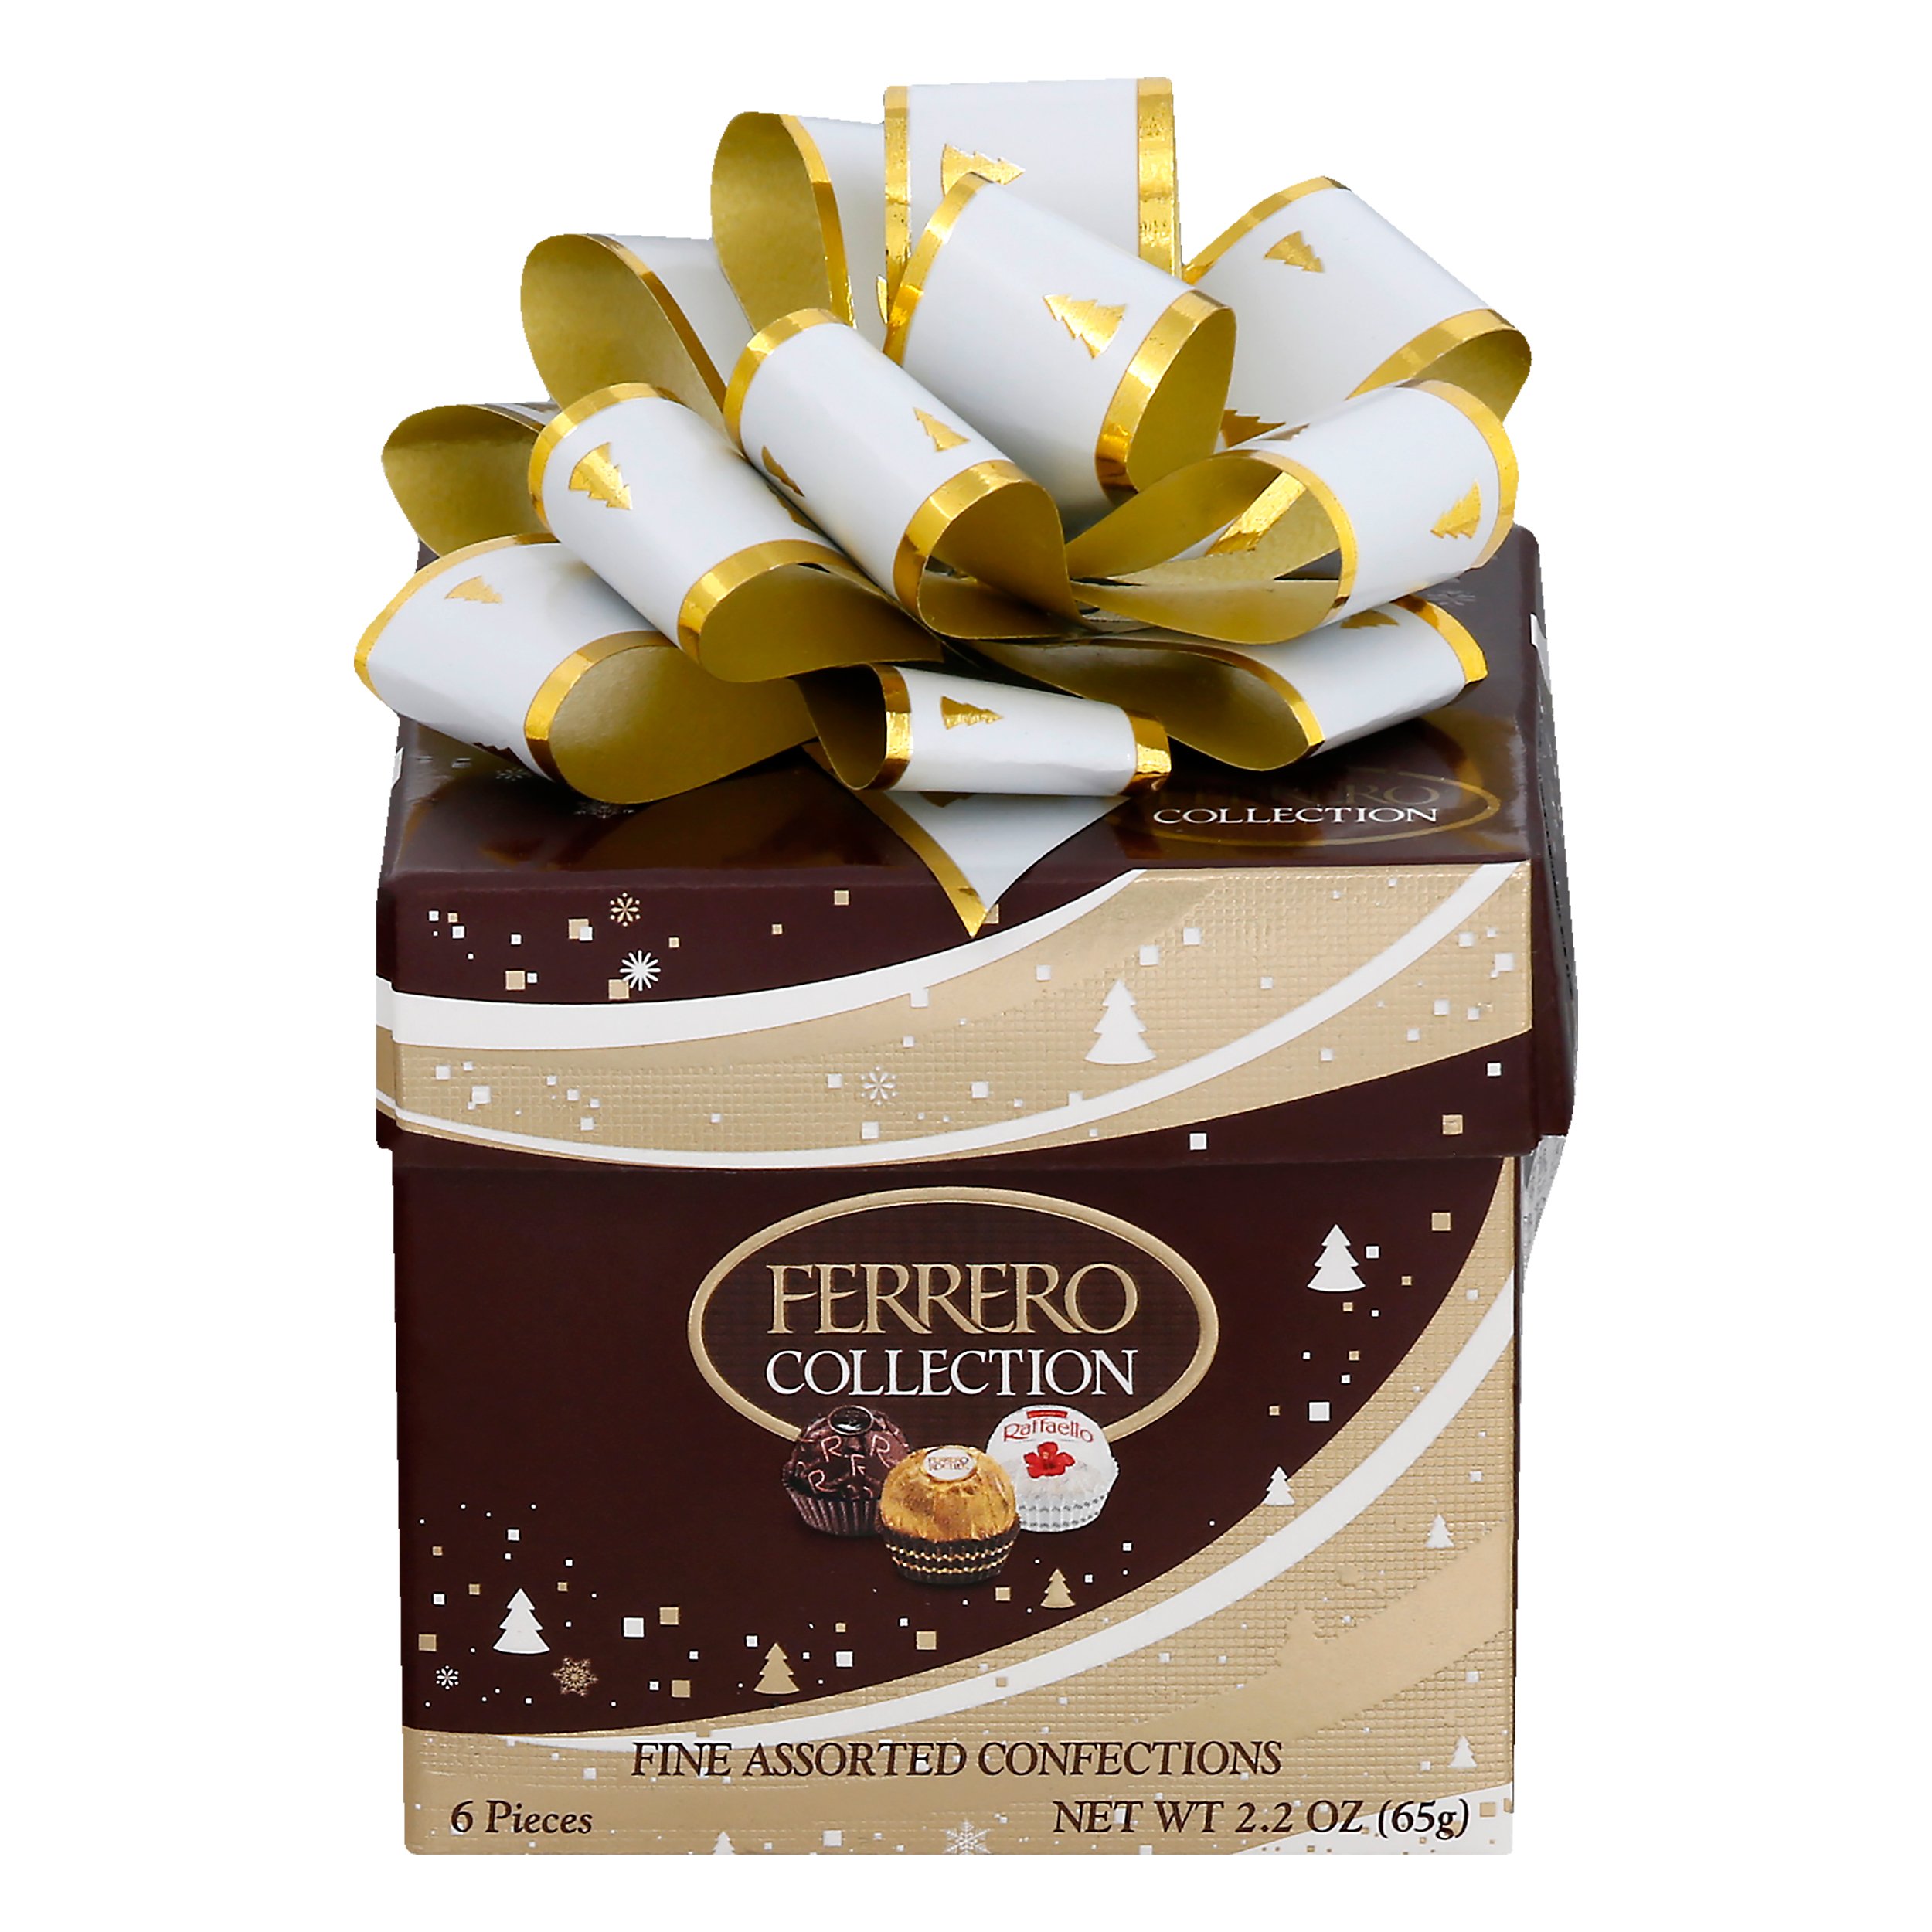 Ferrero Collection Fine Assorted Confections, 4.6 oz